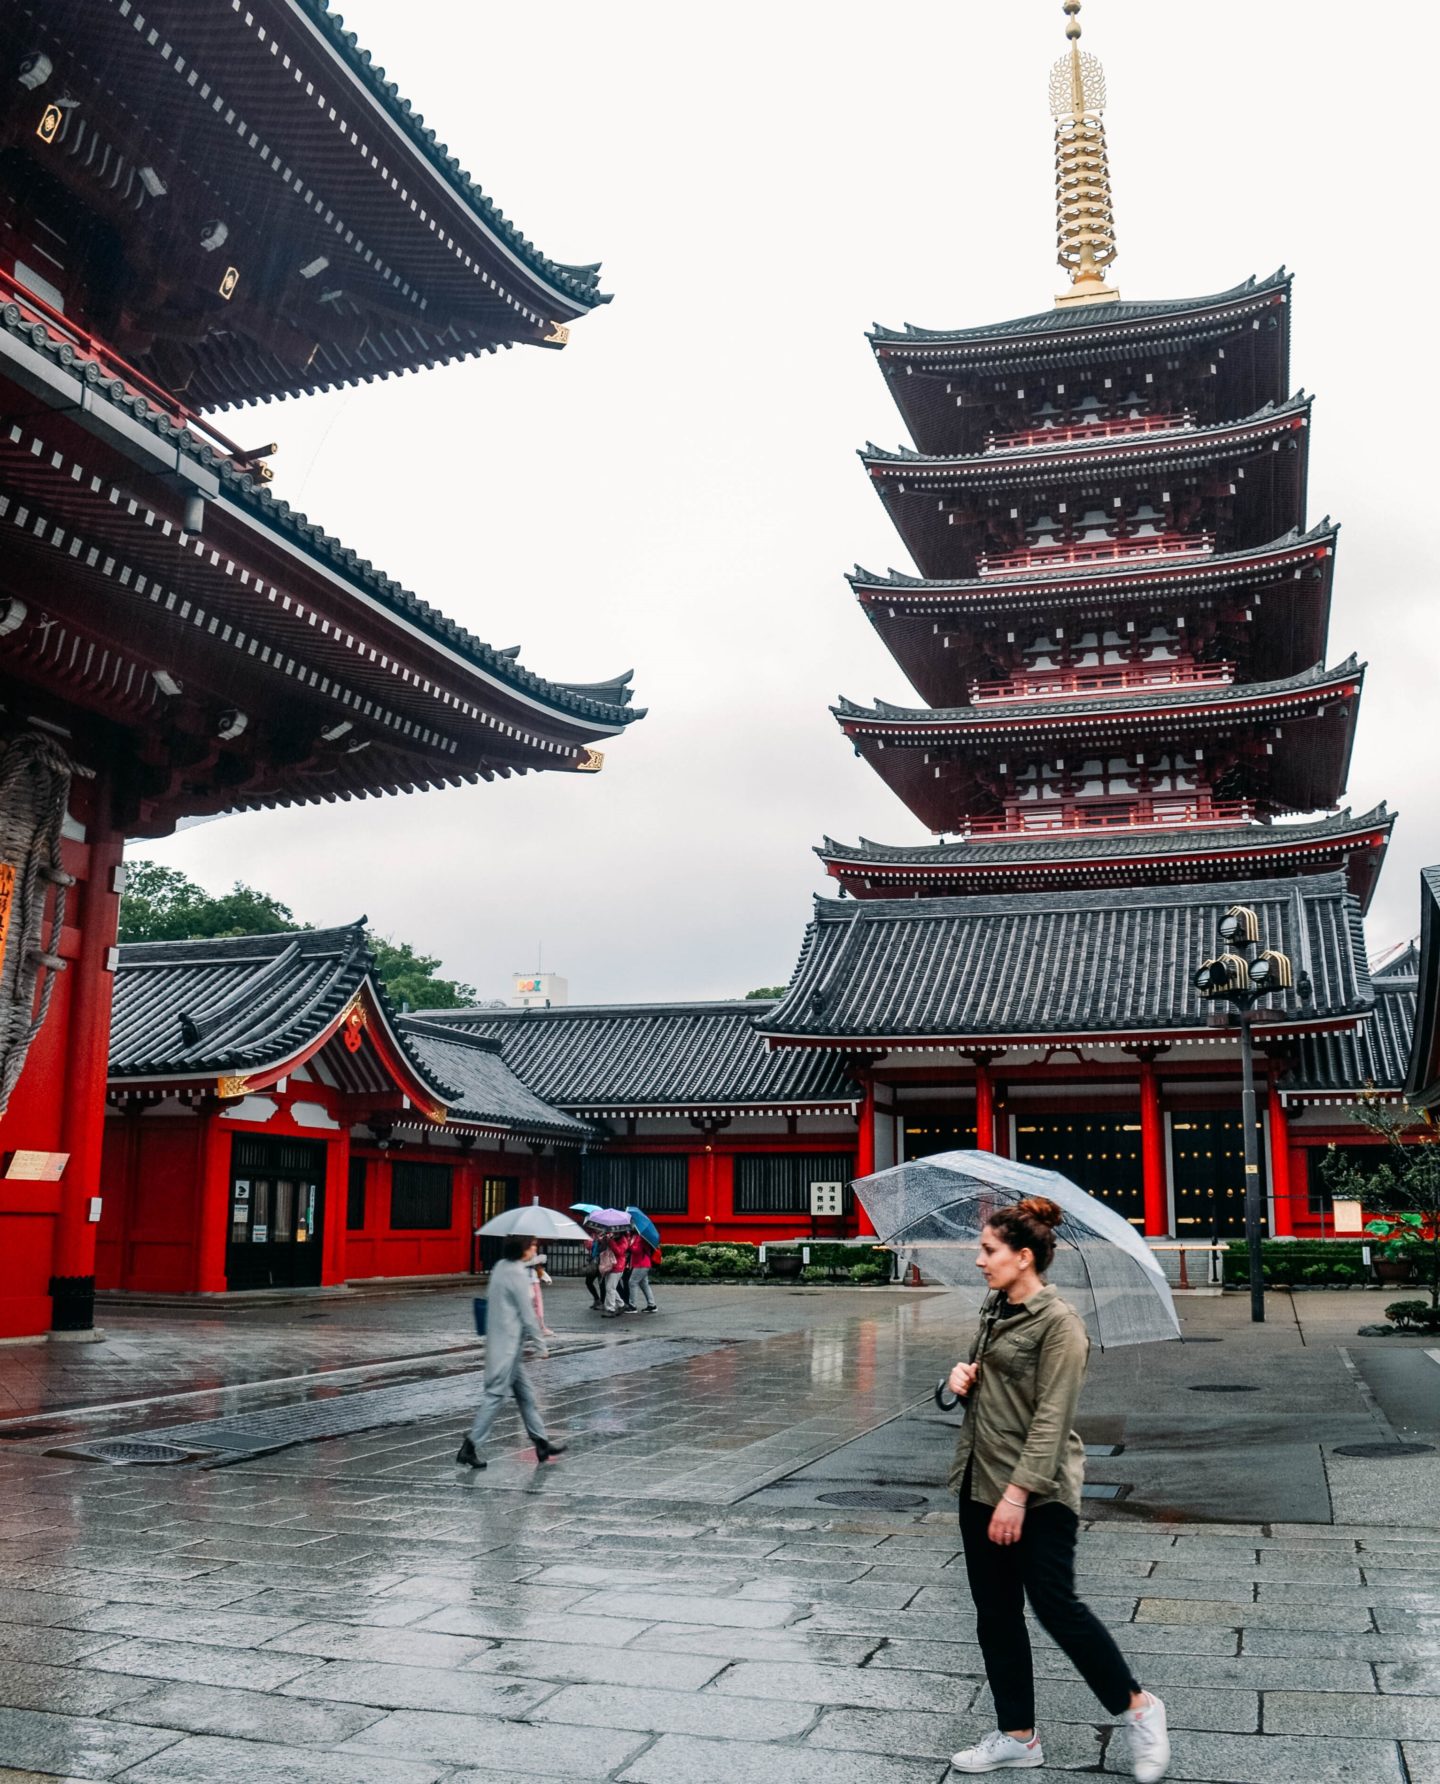 ragazza con ombrello e tempio